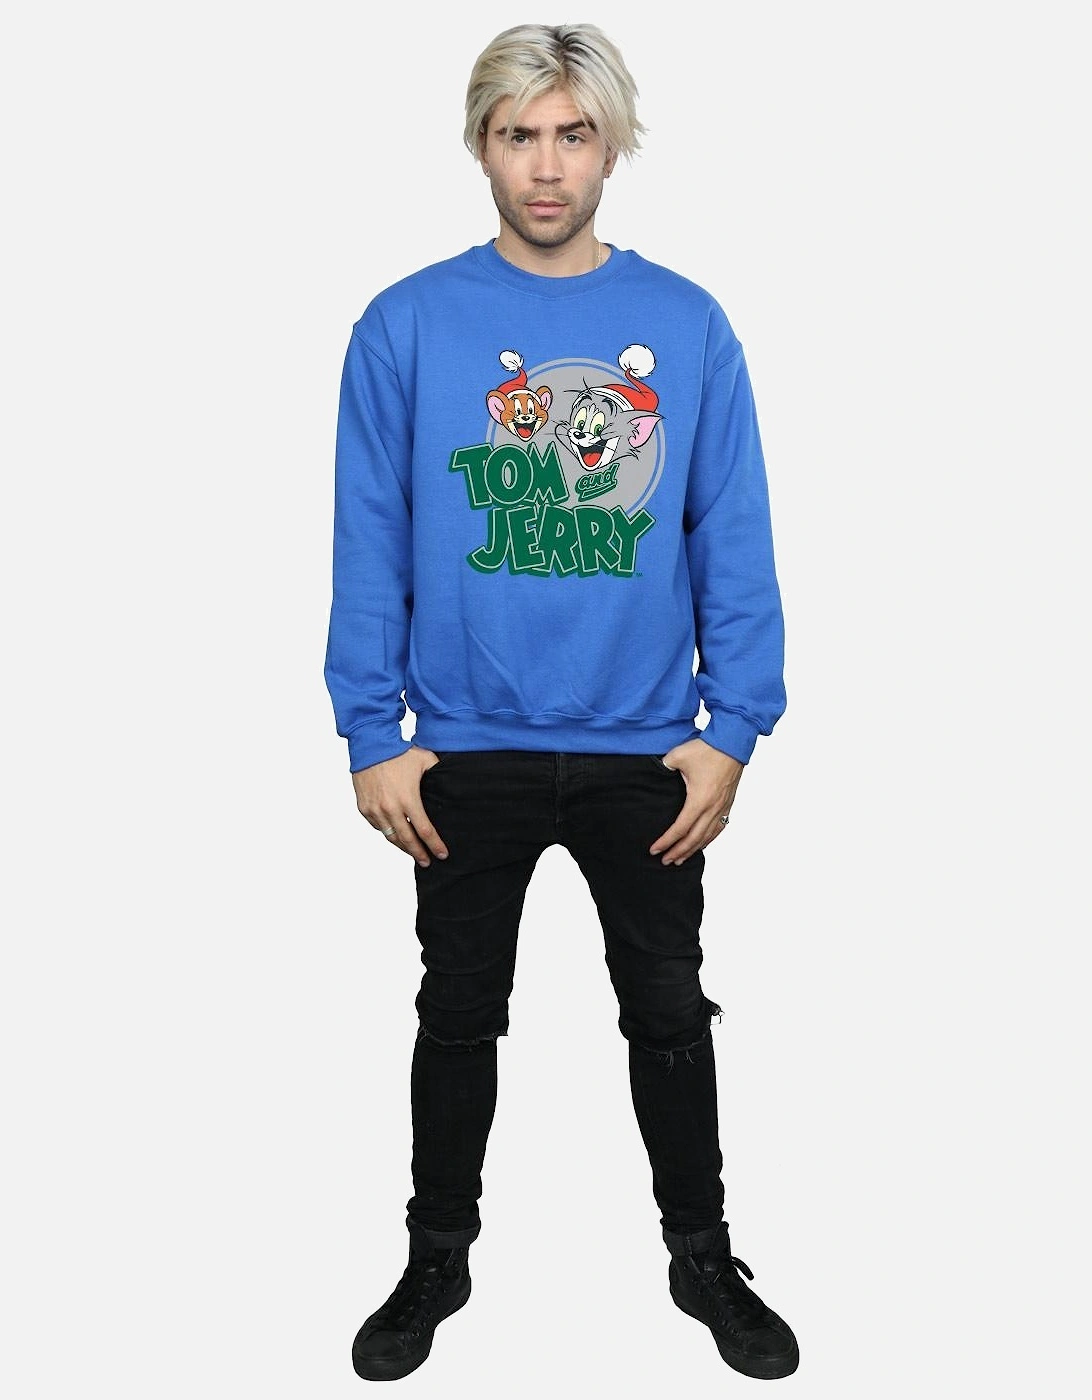 Tom And Jerry Mens Christmas Greetings Sweatshirt